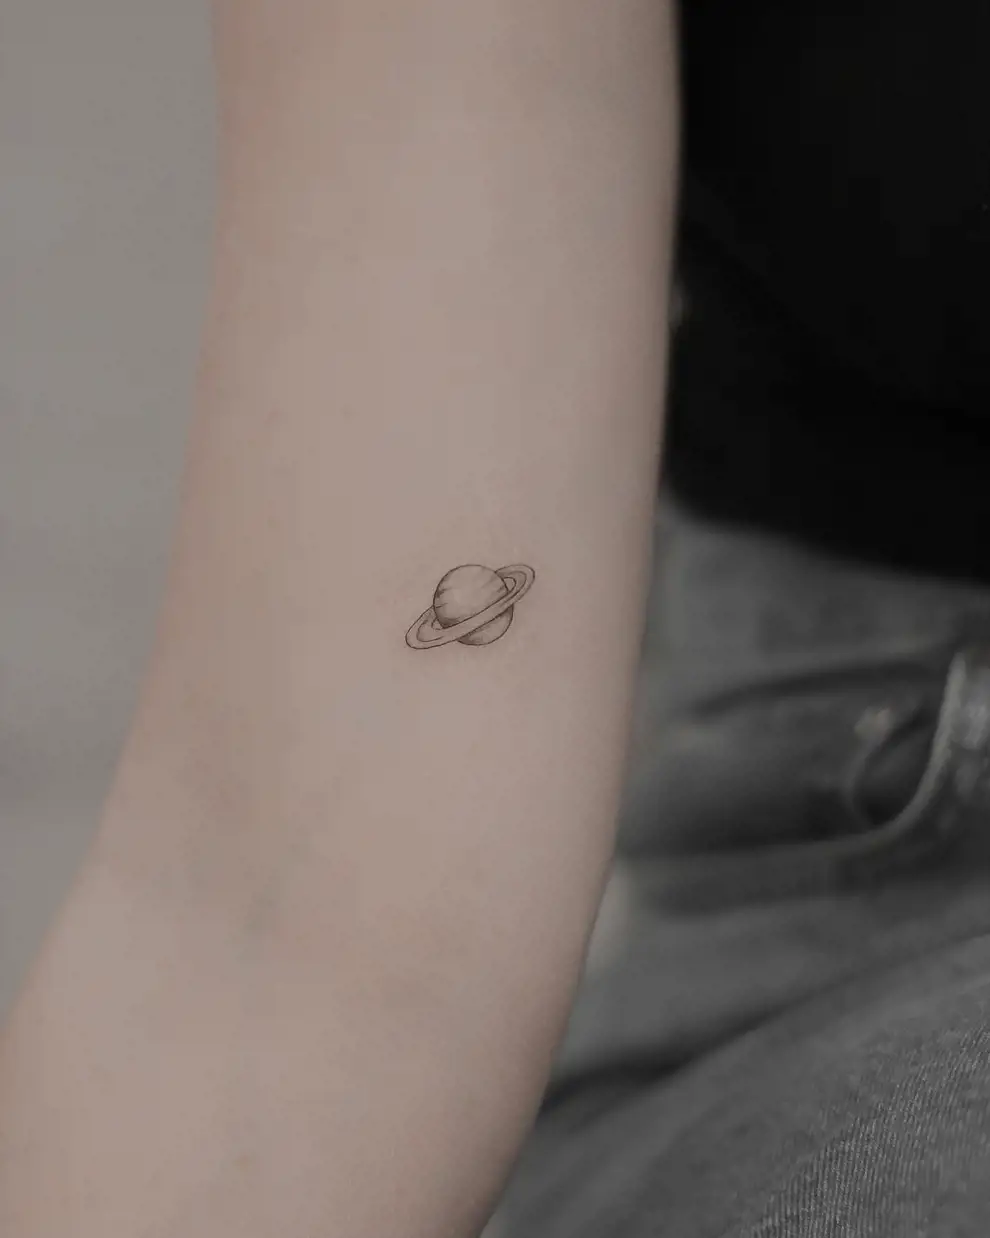 Tatuajes con significado: Saturno